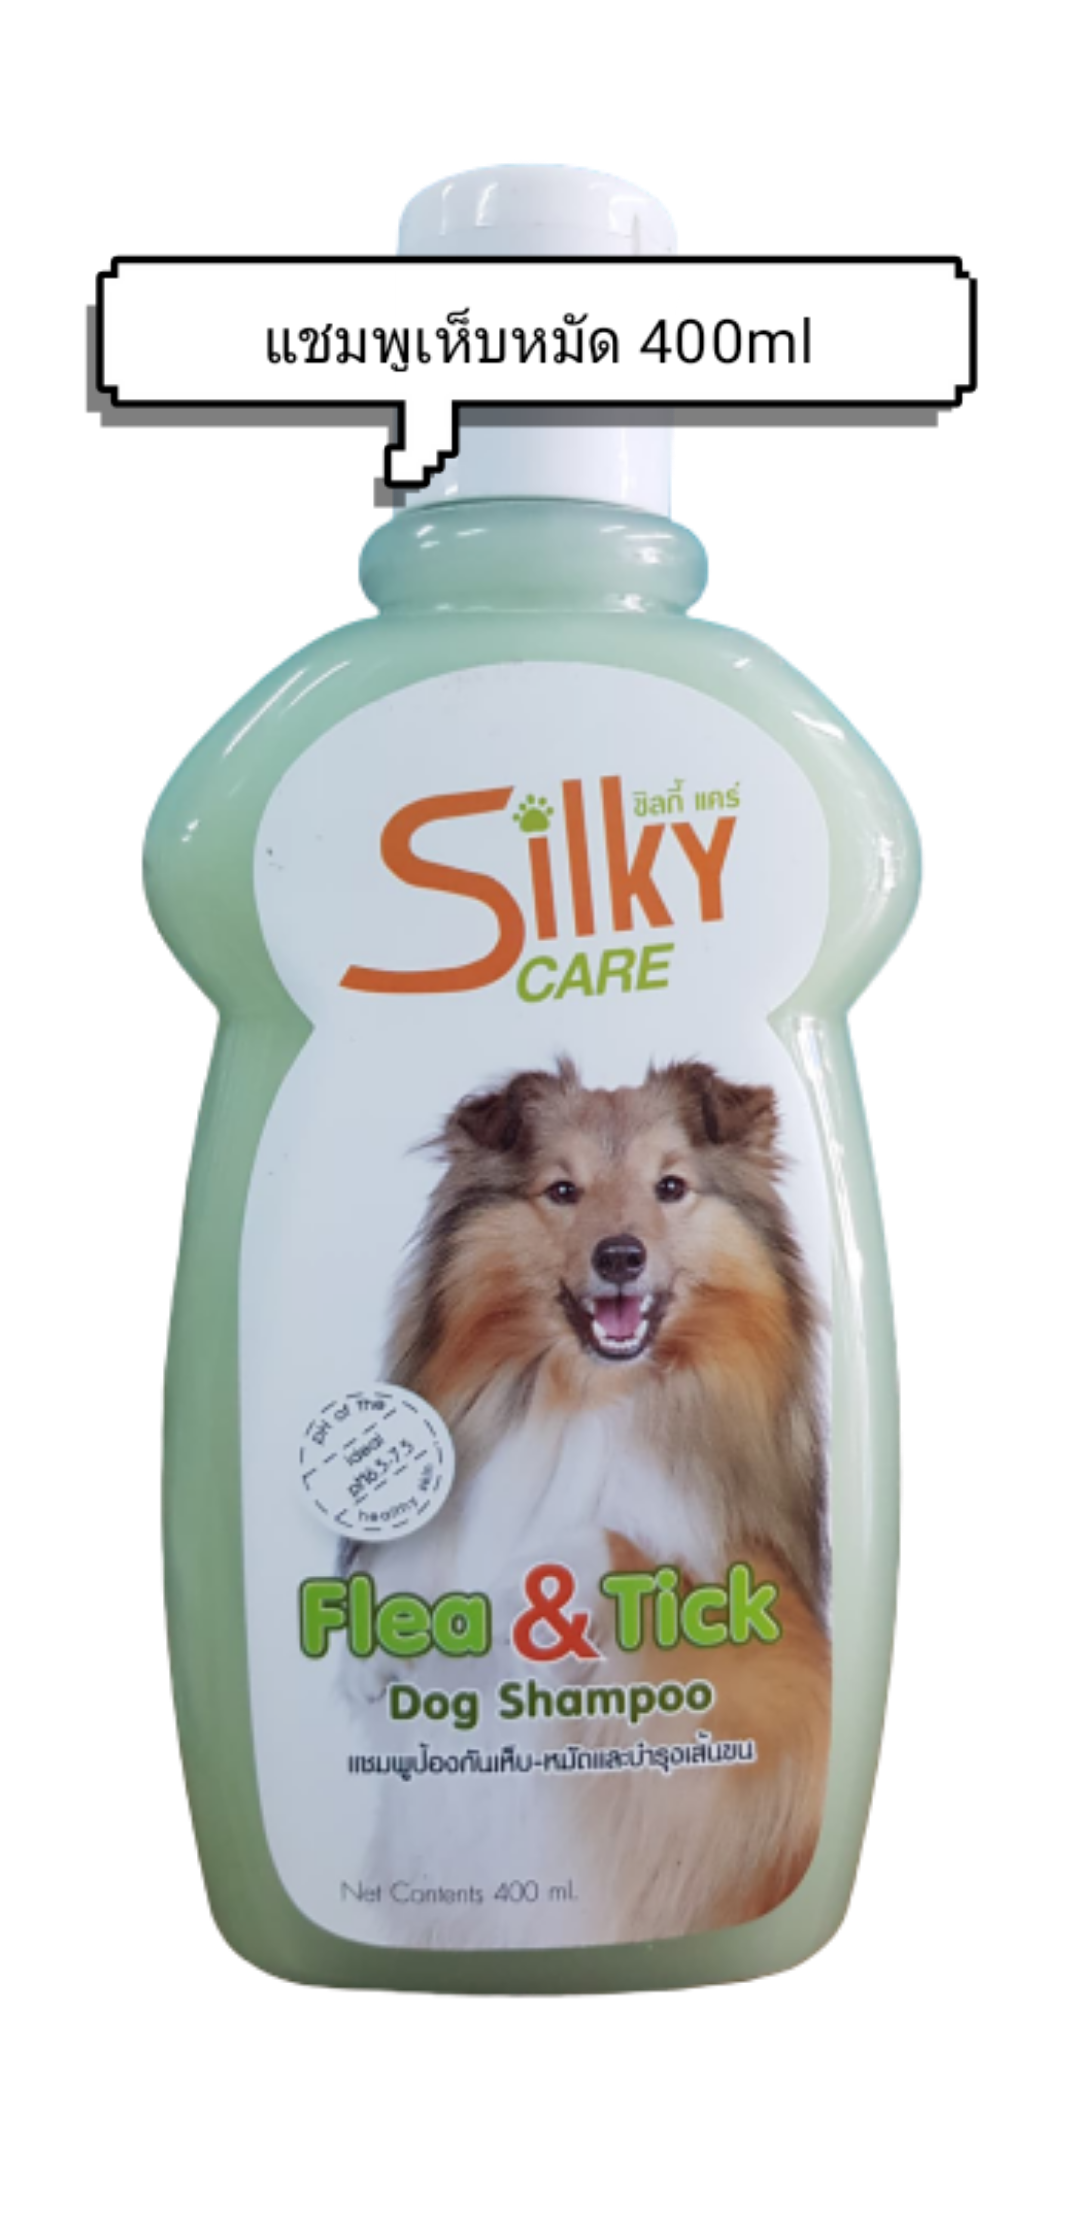 Silky care ซิลกี้ แคร์ แชมพูสำหรับสุนัข